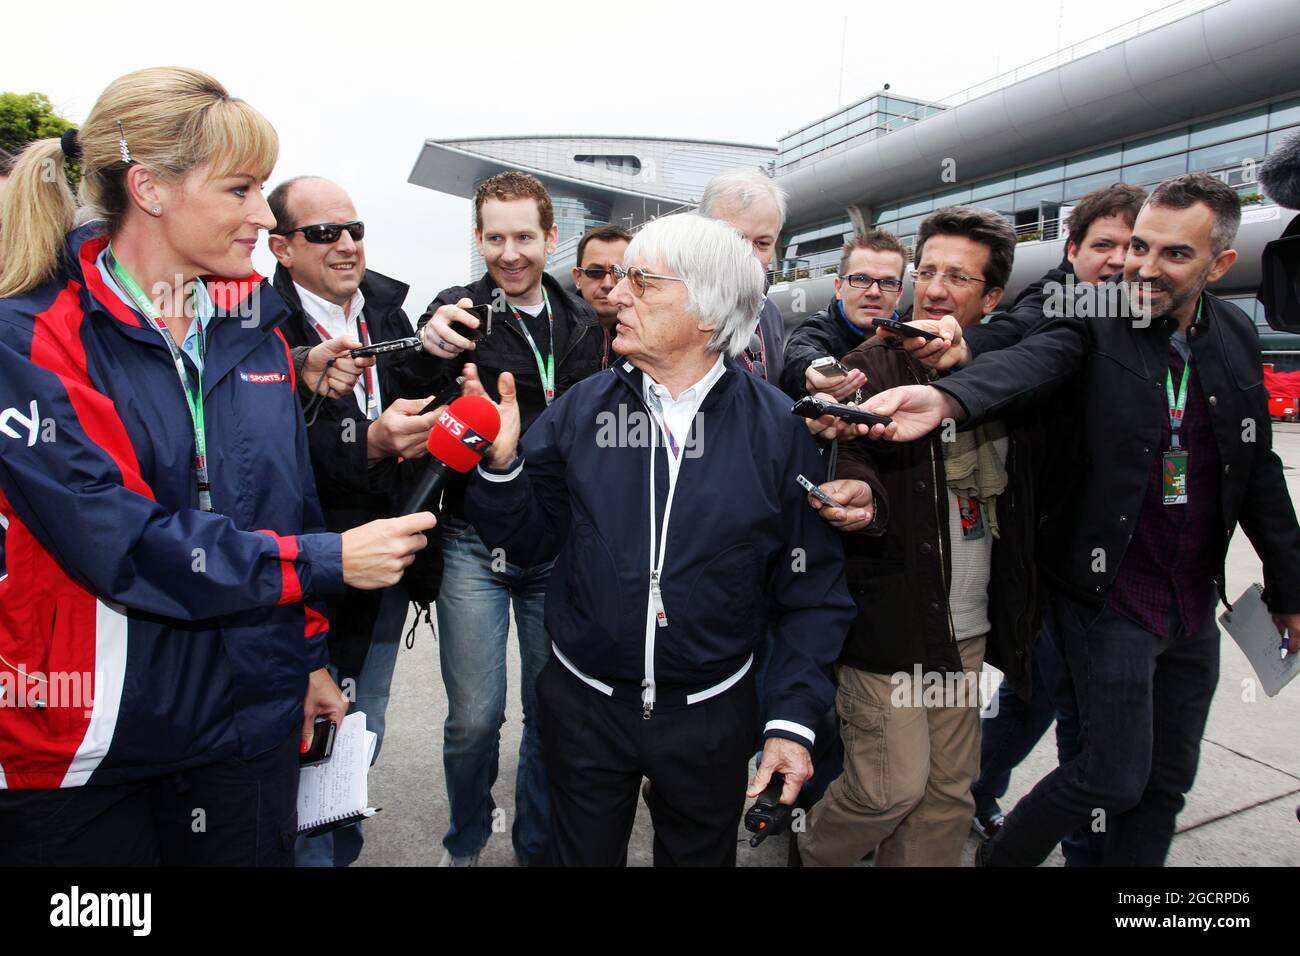 Bernie Ecclestone (GBR) CEO di Formula One Group (FOM) con Rachel Brookes (GBR) Sky Sports News Presenter (Left) e othe membri dei media. Gran Premio di Cina, venerdì 13 aprile 2012. Shanghai, Cina. Foto Stock